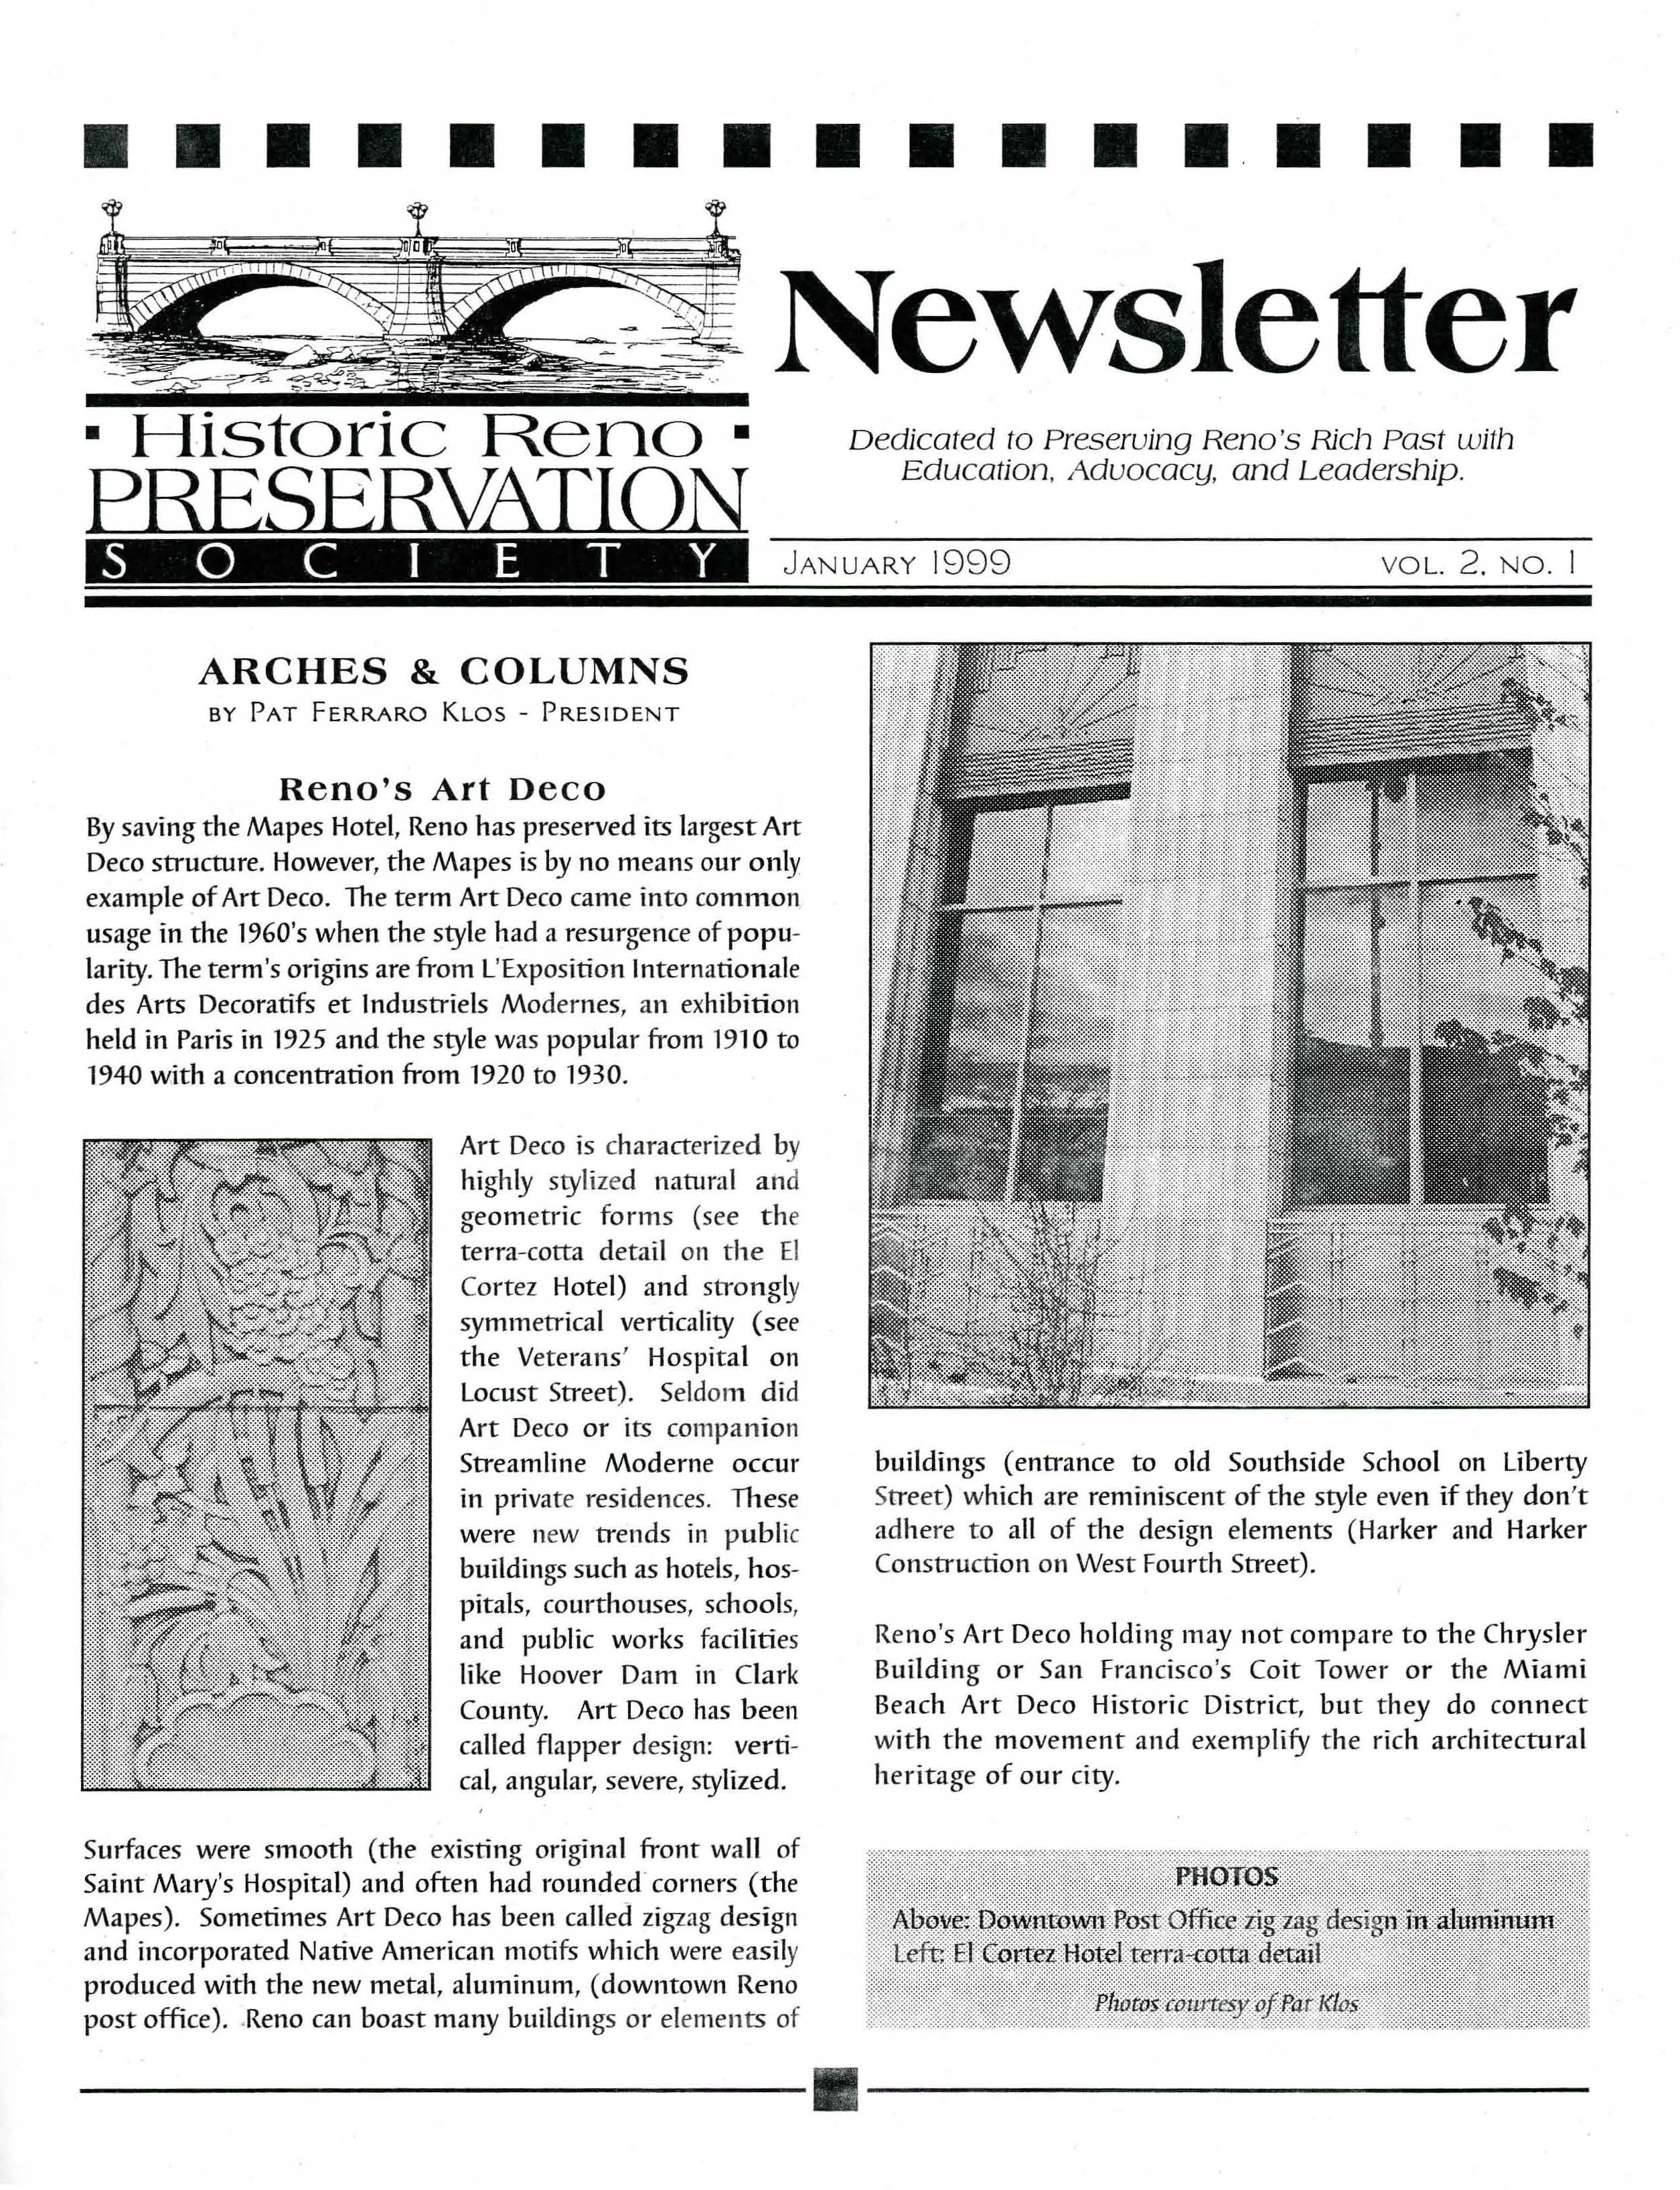 Newsletter Volume 2, Number 1, January 1999